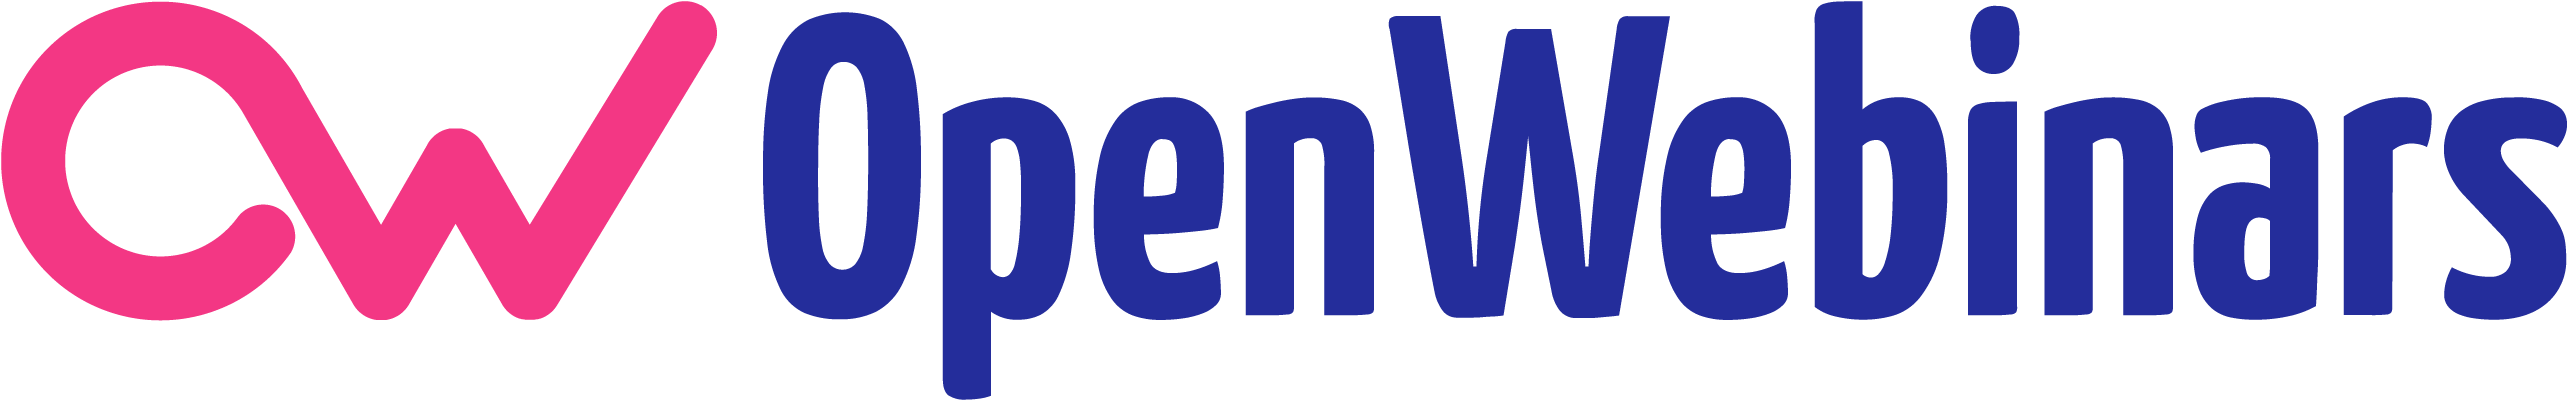 Logotipo Openwebinars